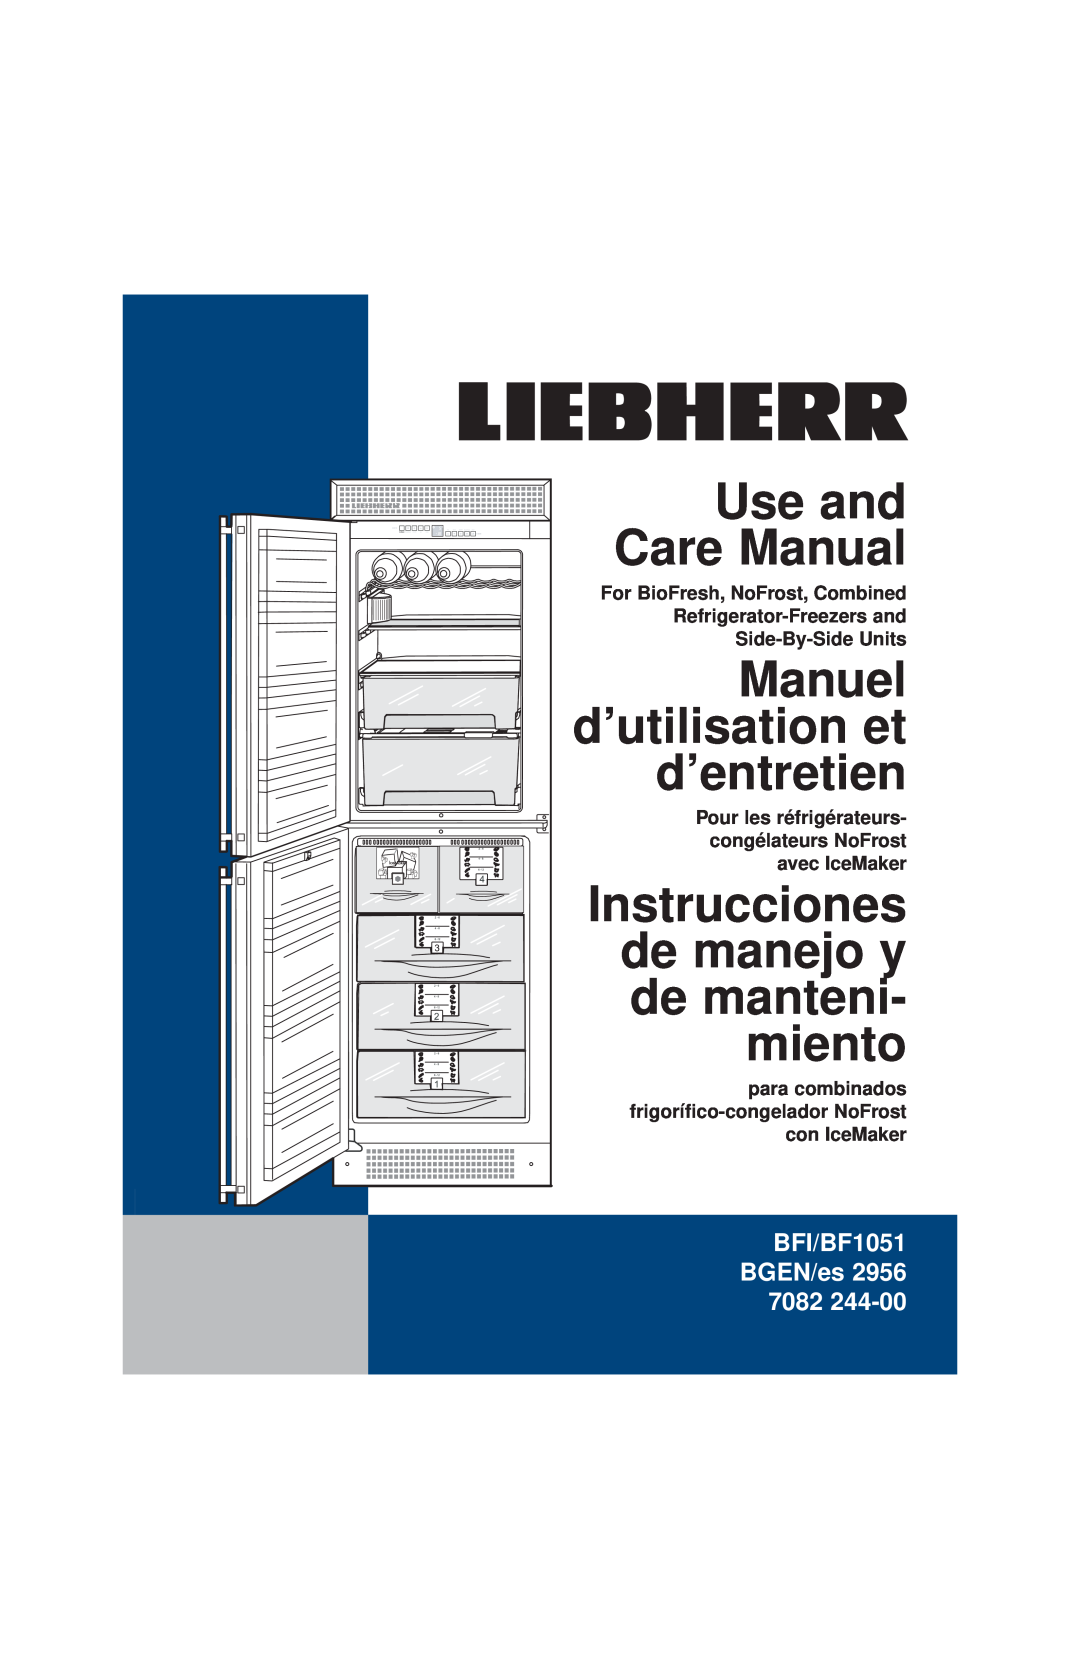 Liebherr 2956, 7082 manuel dutilisation For BioFresh, NoFrost, Combined, Refrigerator-Freezersand Side-By-SideUnits 